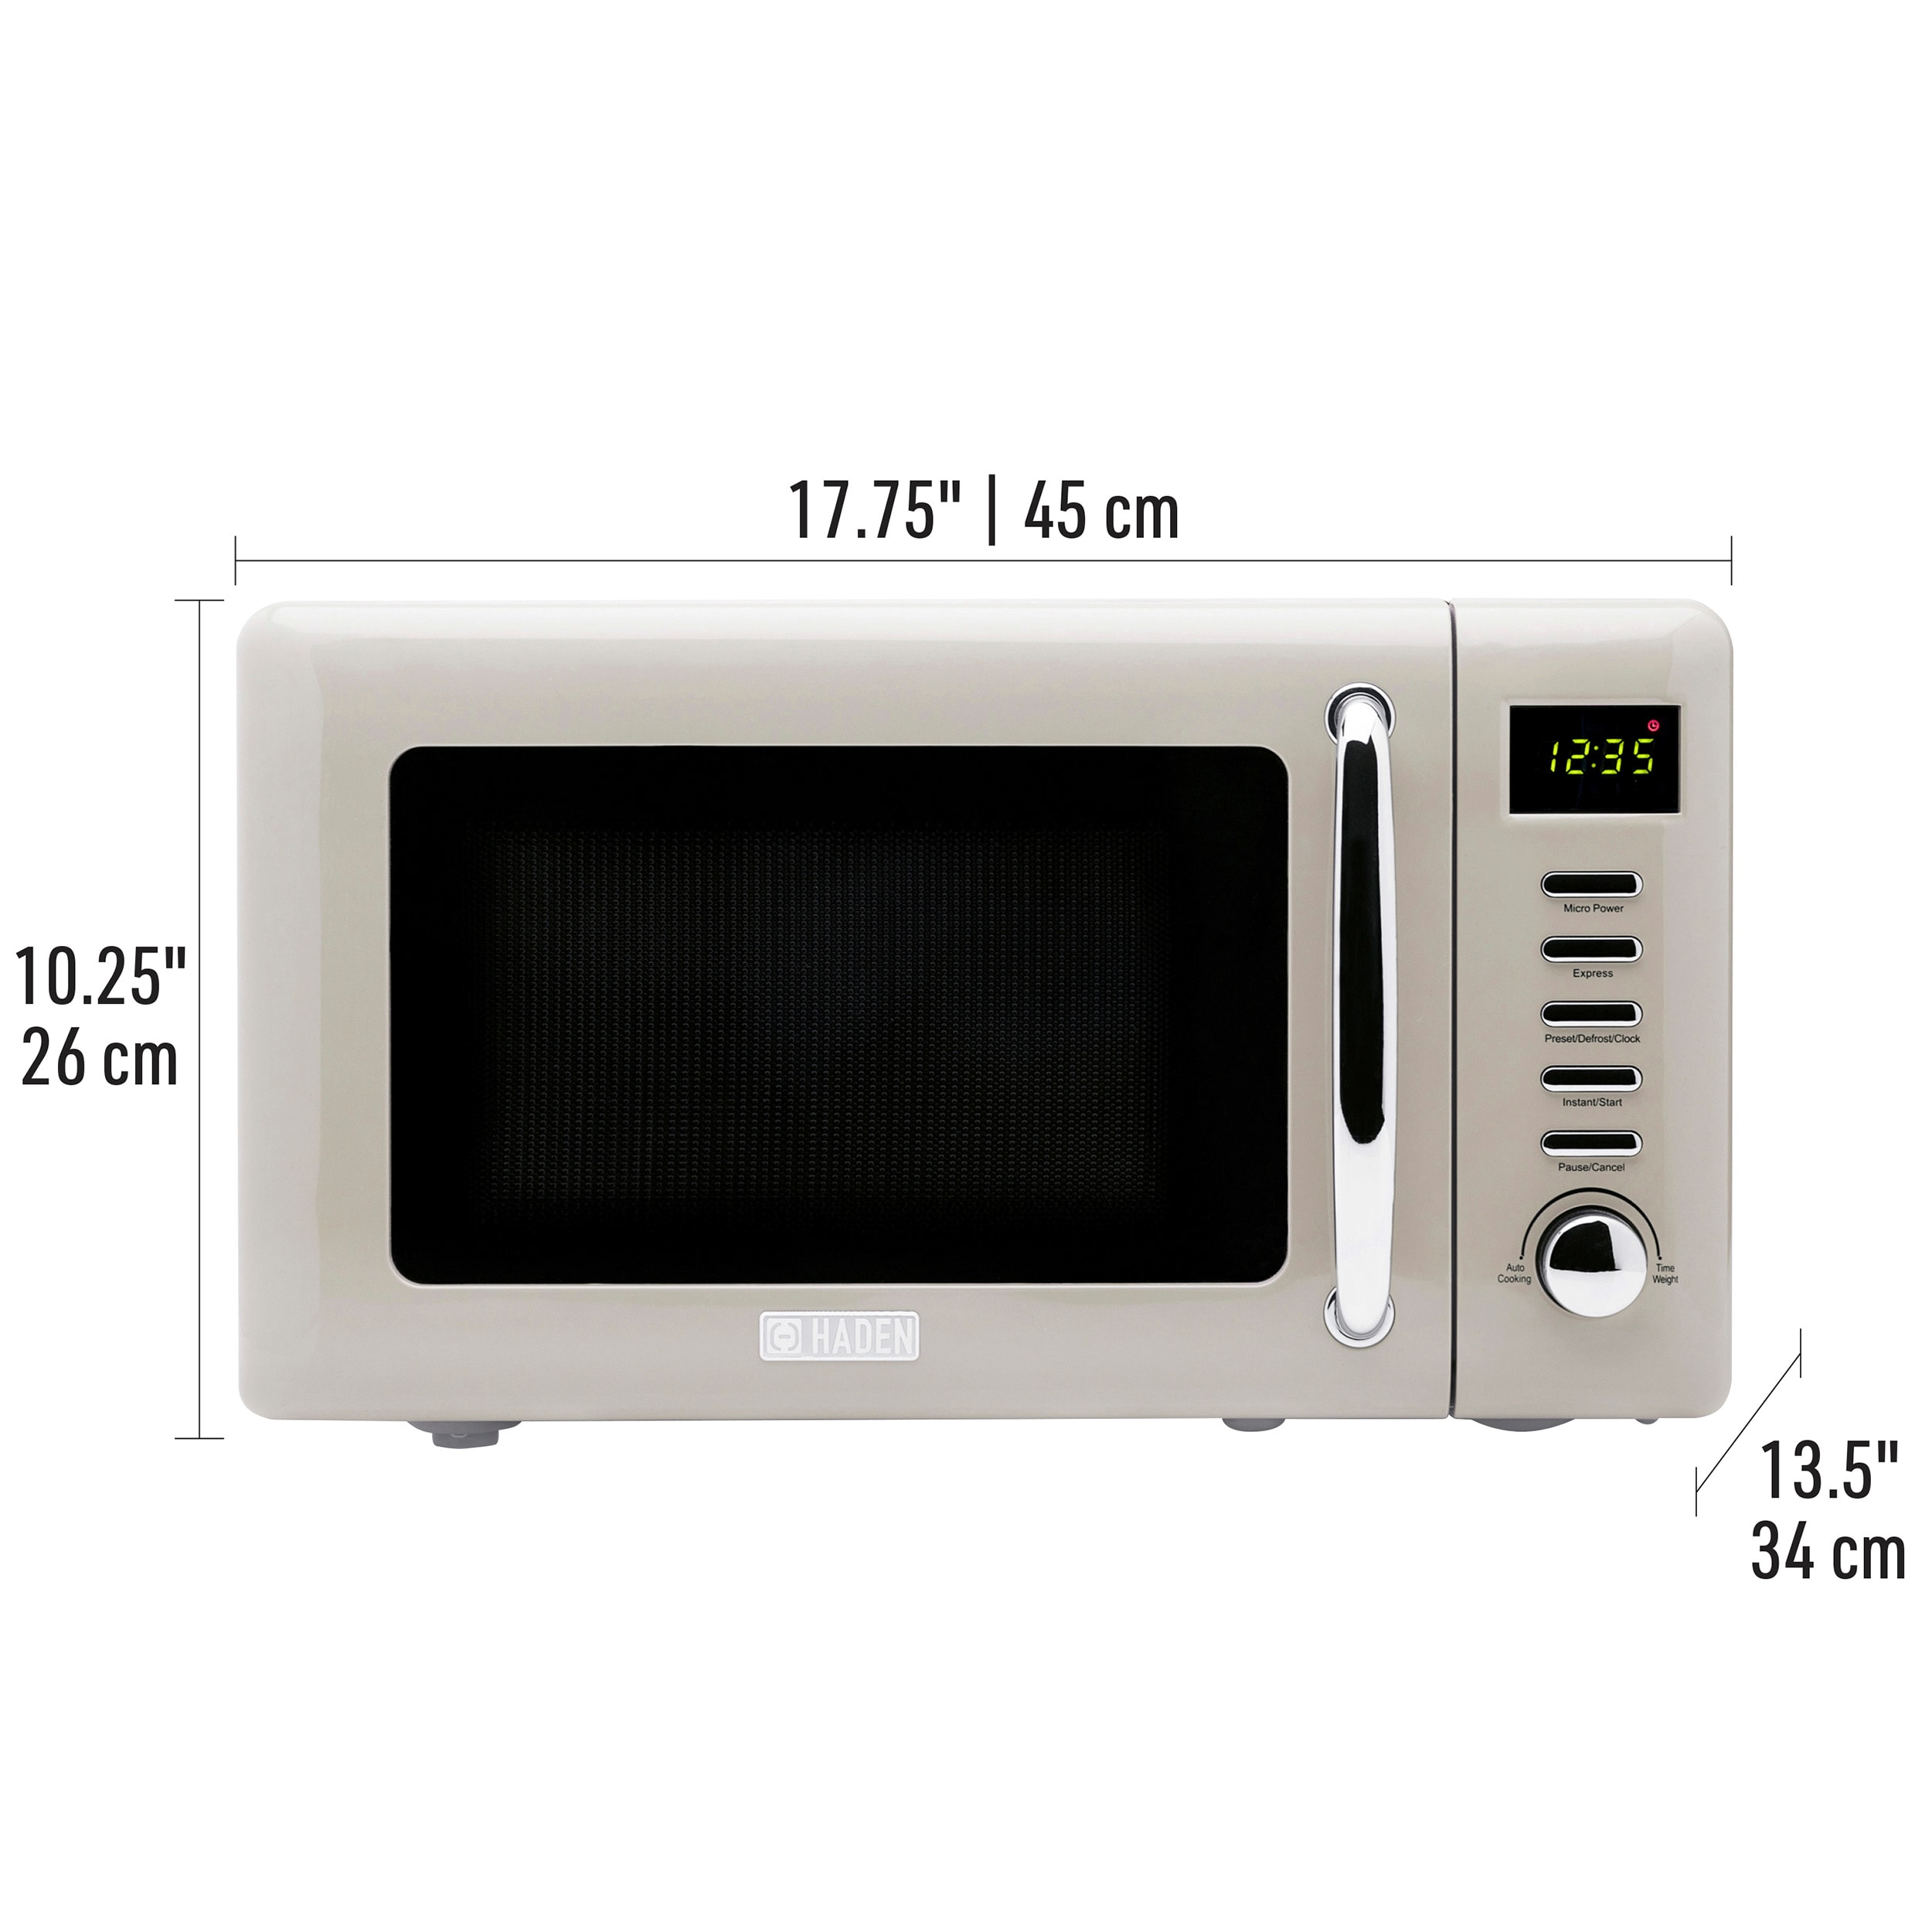 Microwave Oven Compact Countertop Digital Kitchen 0.7 Cu Ft Freestanding US